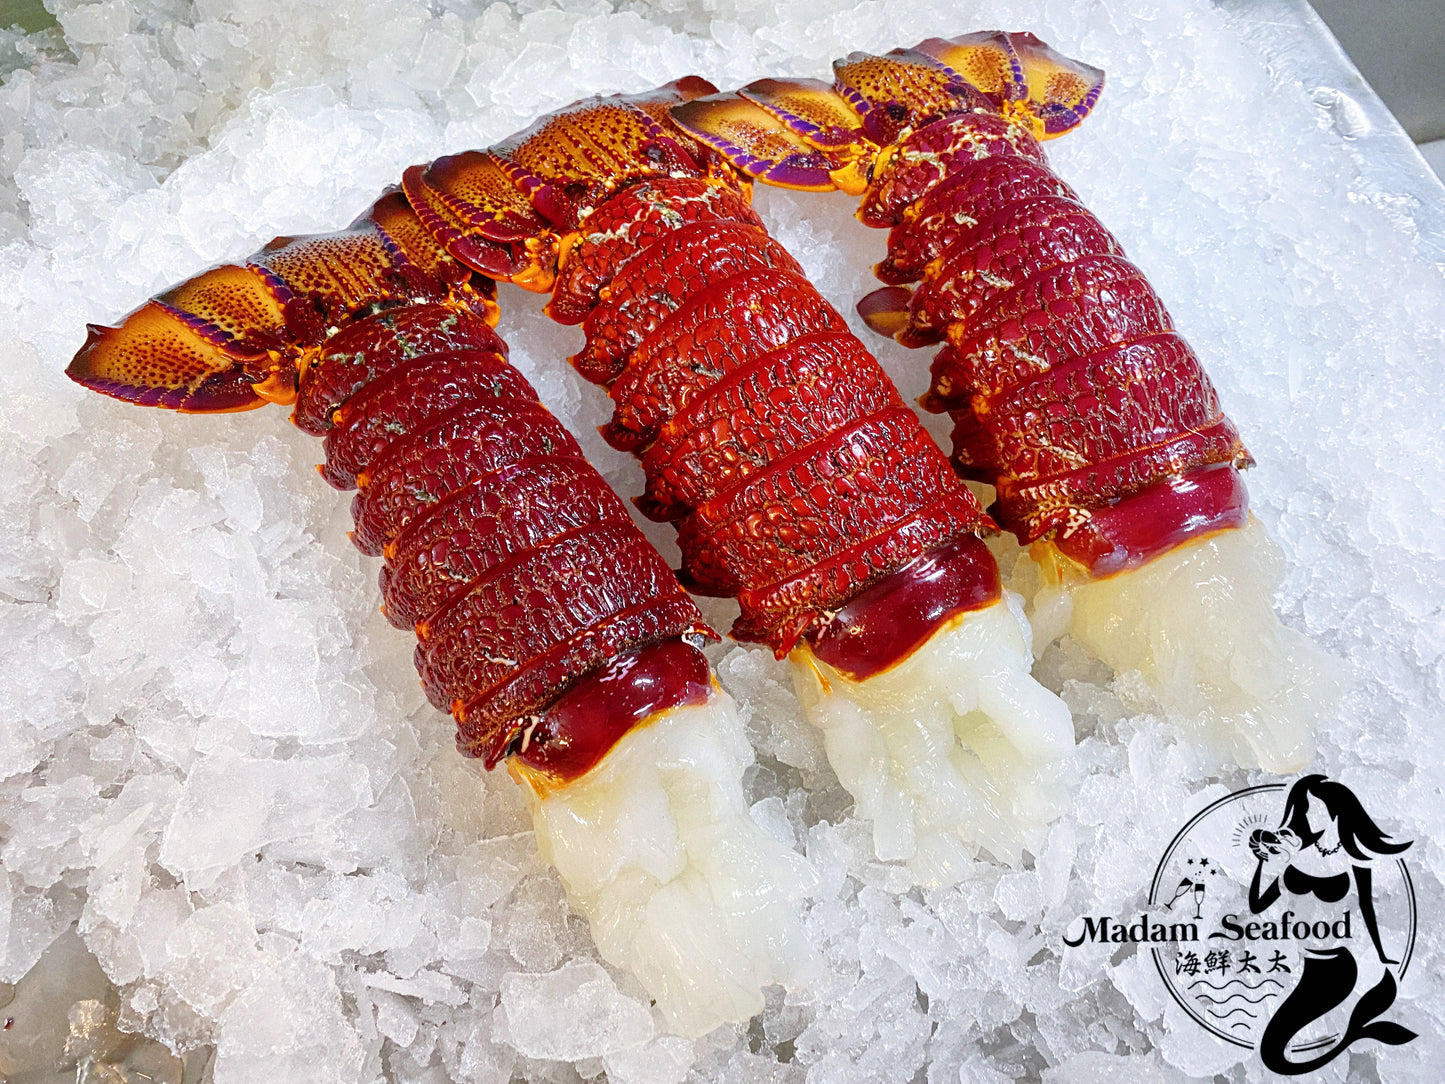 Southern Rock Lobster Tail (Frozen)